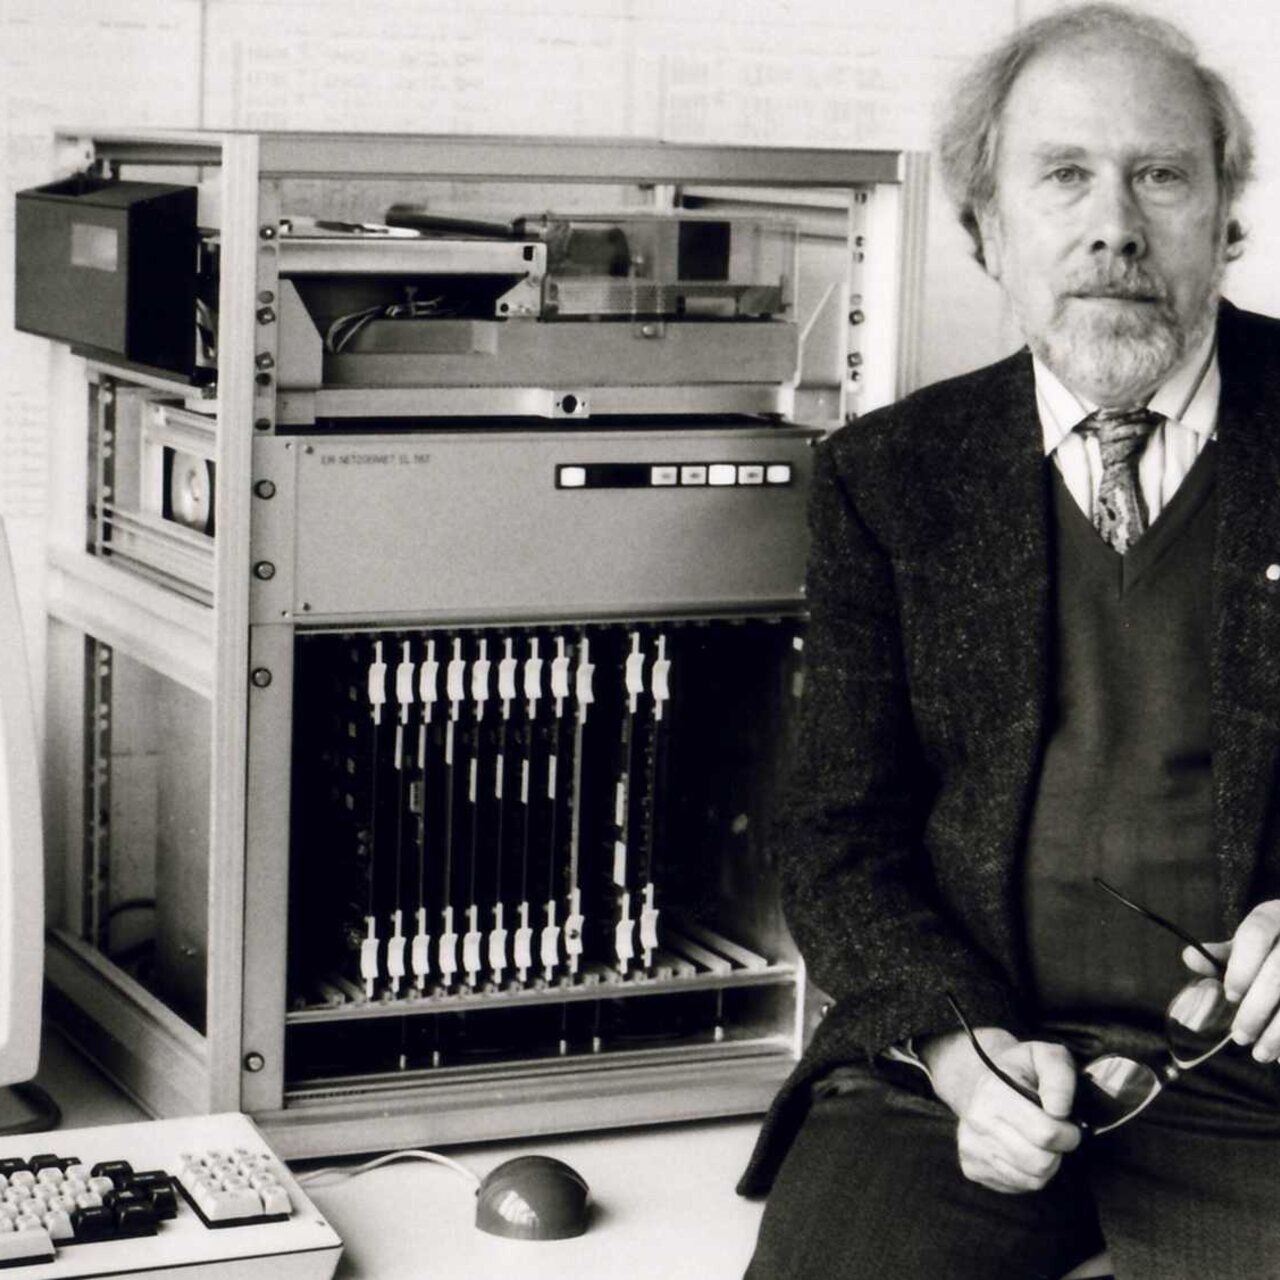 Niklaus Wirth : a remporté le prestigieux Turing Award en 1984